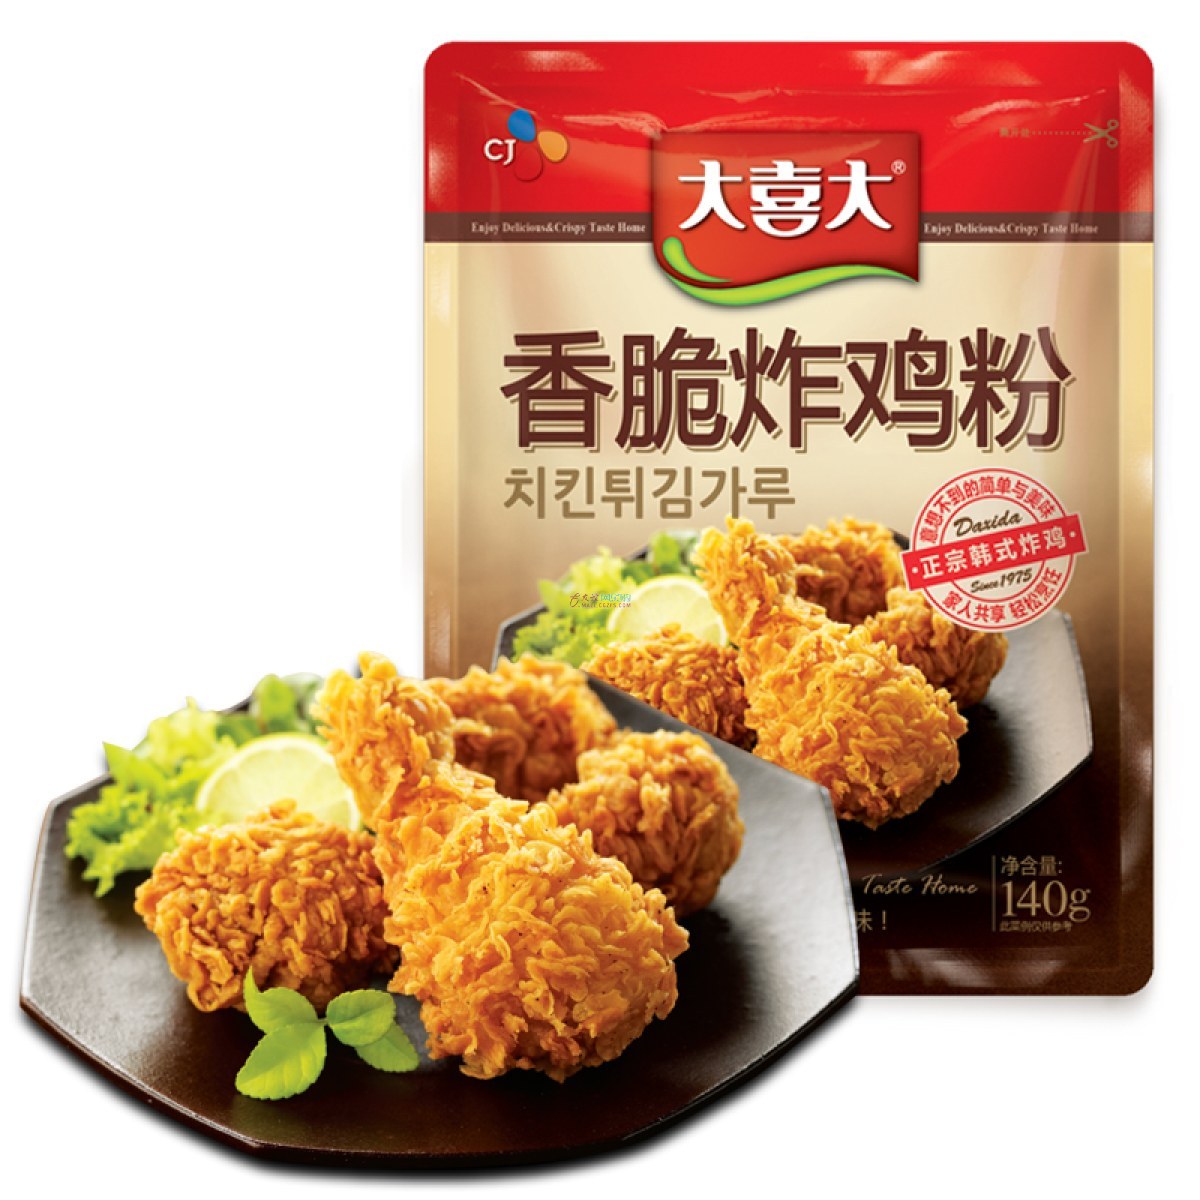 PAK LONG 炸鸡粉 (Ori) Chicken Fritter Flour 1kg - Bak Lai Fish Ball Food ...